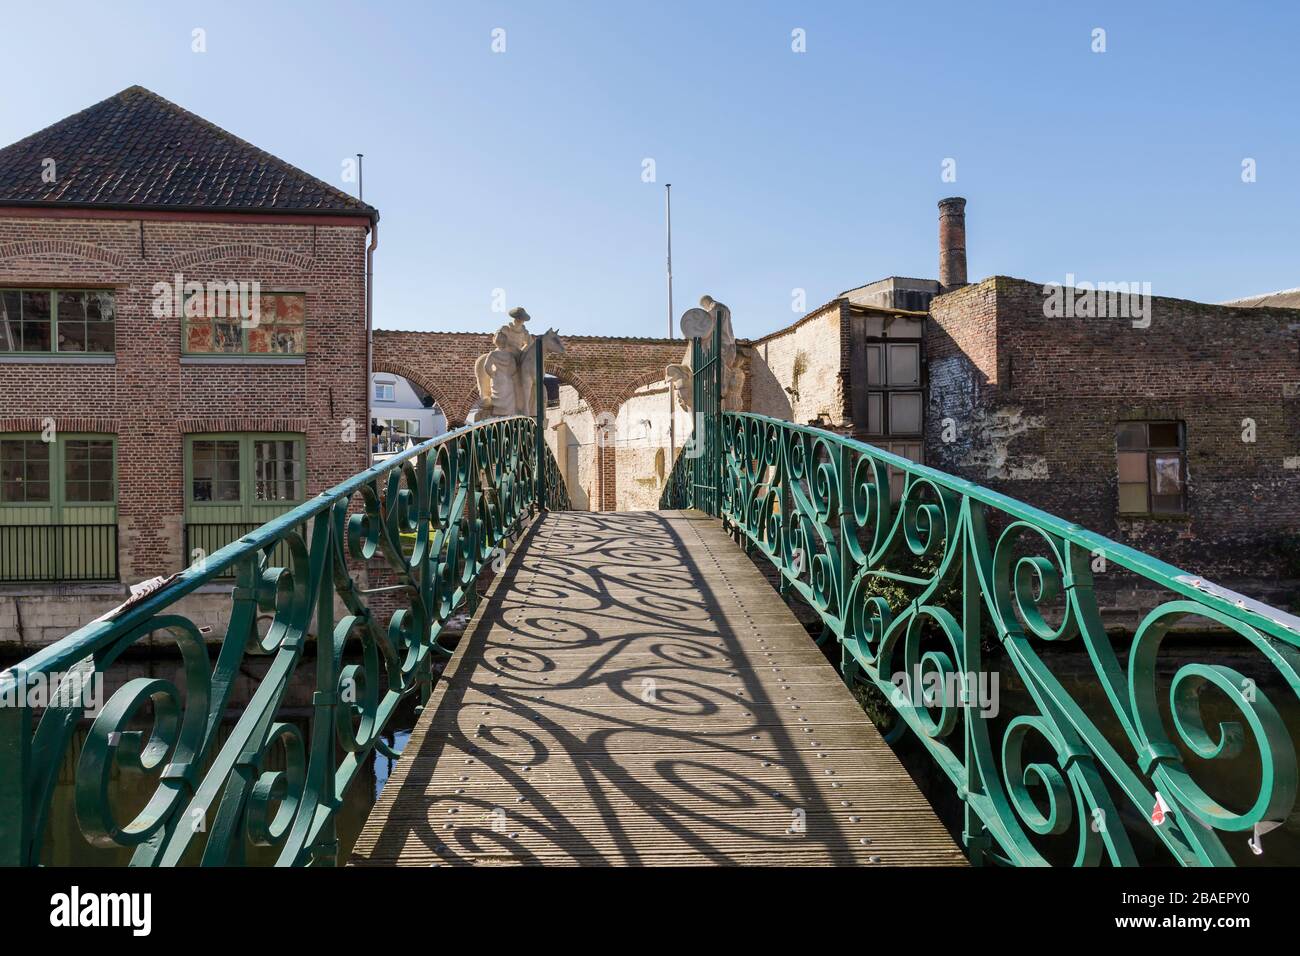 Gent, Belgium - March 25, 2020: The Bridge of Imperial Pleasures over the river Lieve. Prinsenhof neighborhood. Stock Photo